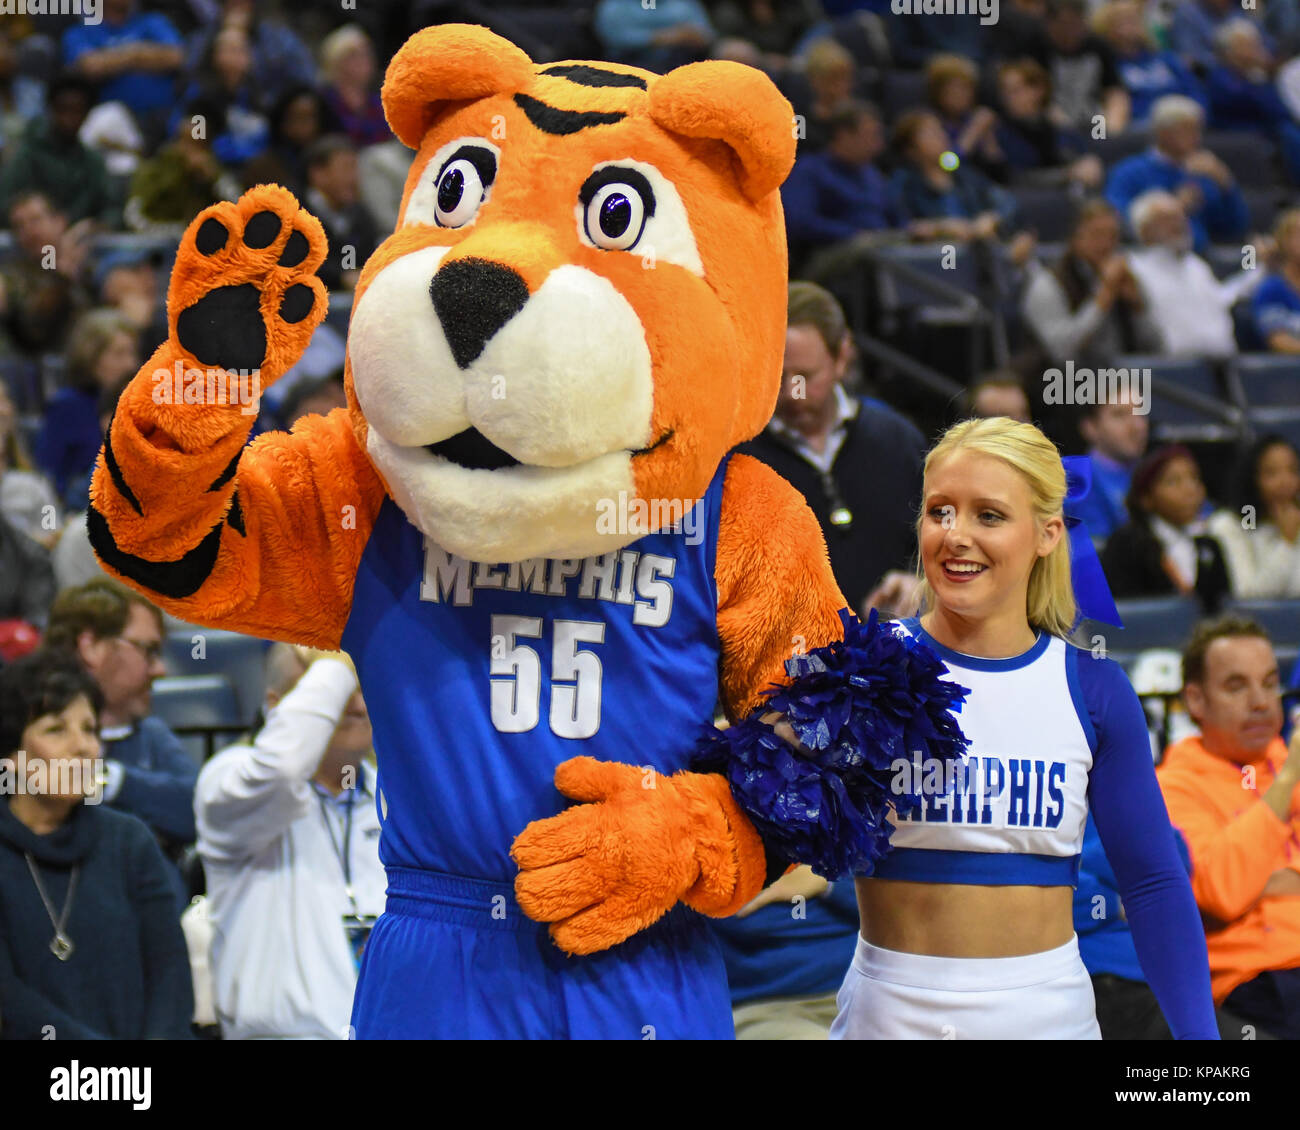 December 12, 2017; Memphis, TN, USA; The Memphis Tigers mascot